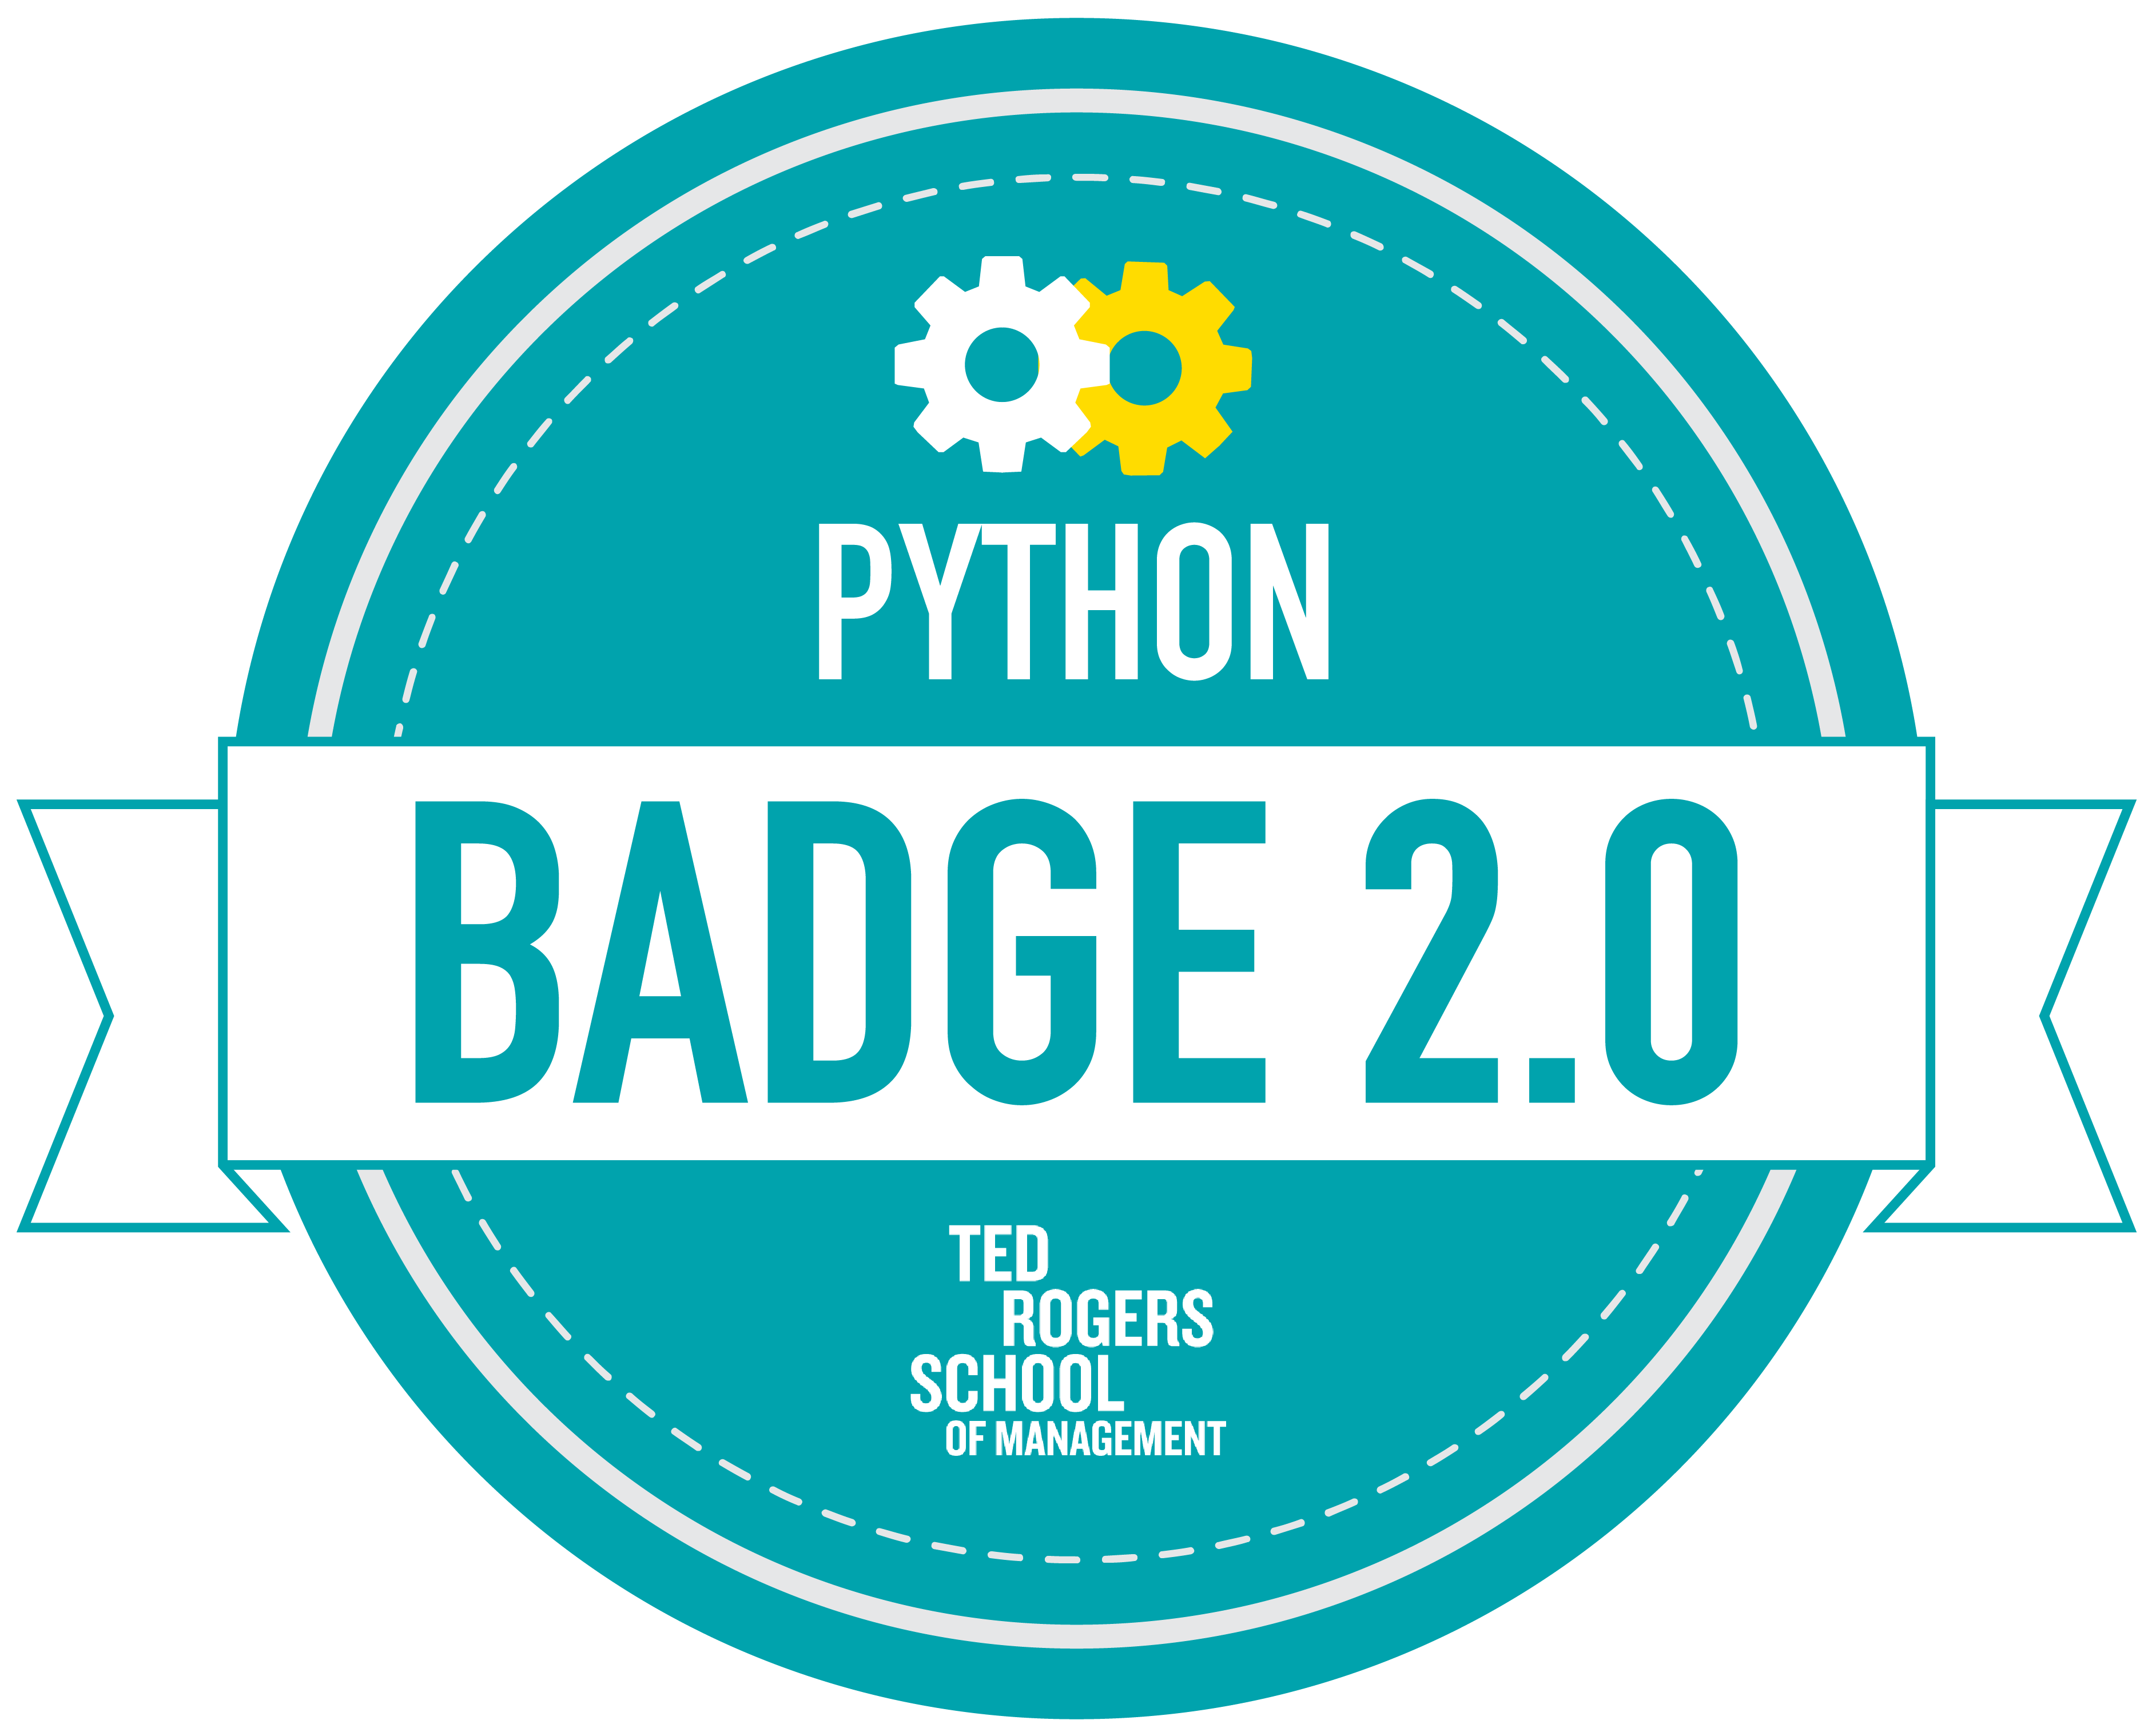 Python Badge 2.0